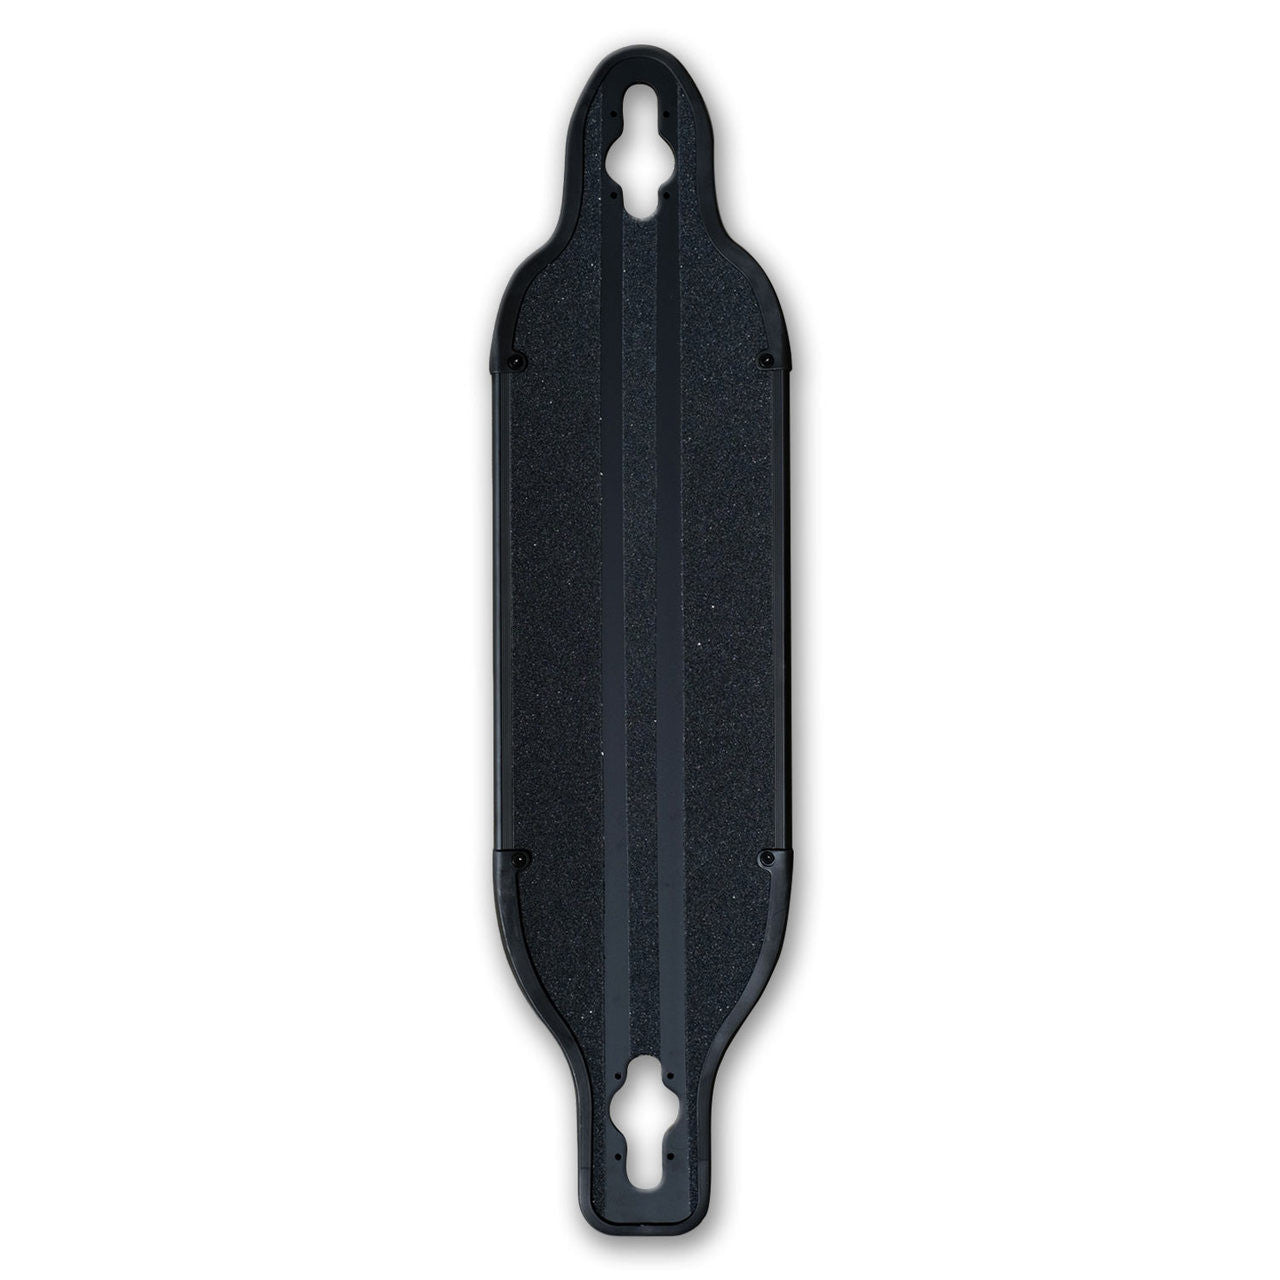 Yocaher Aluminum Drop Through longboard Deck - Black